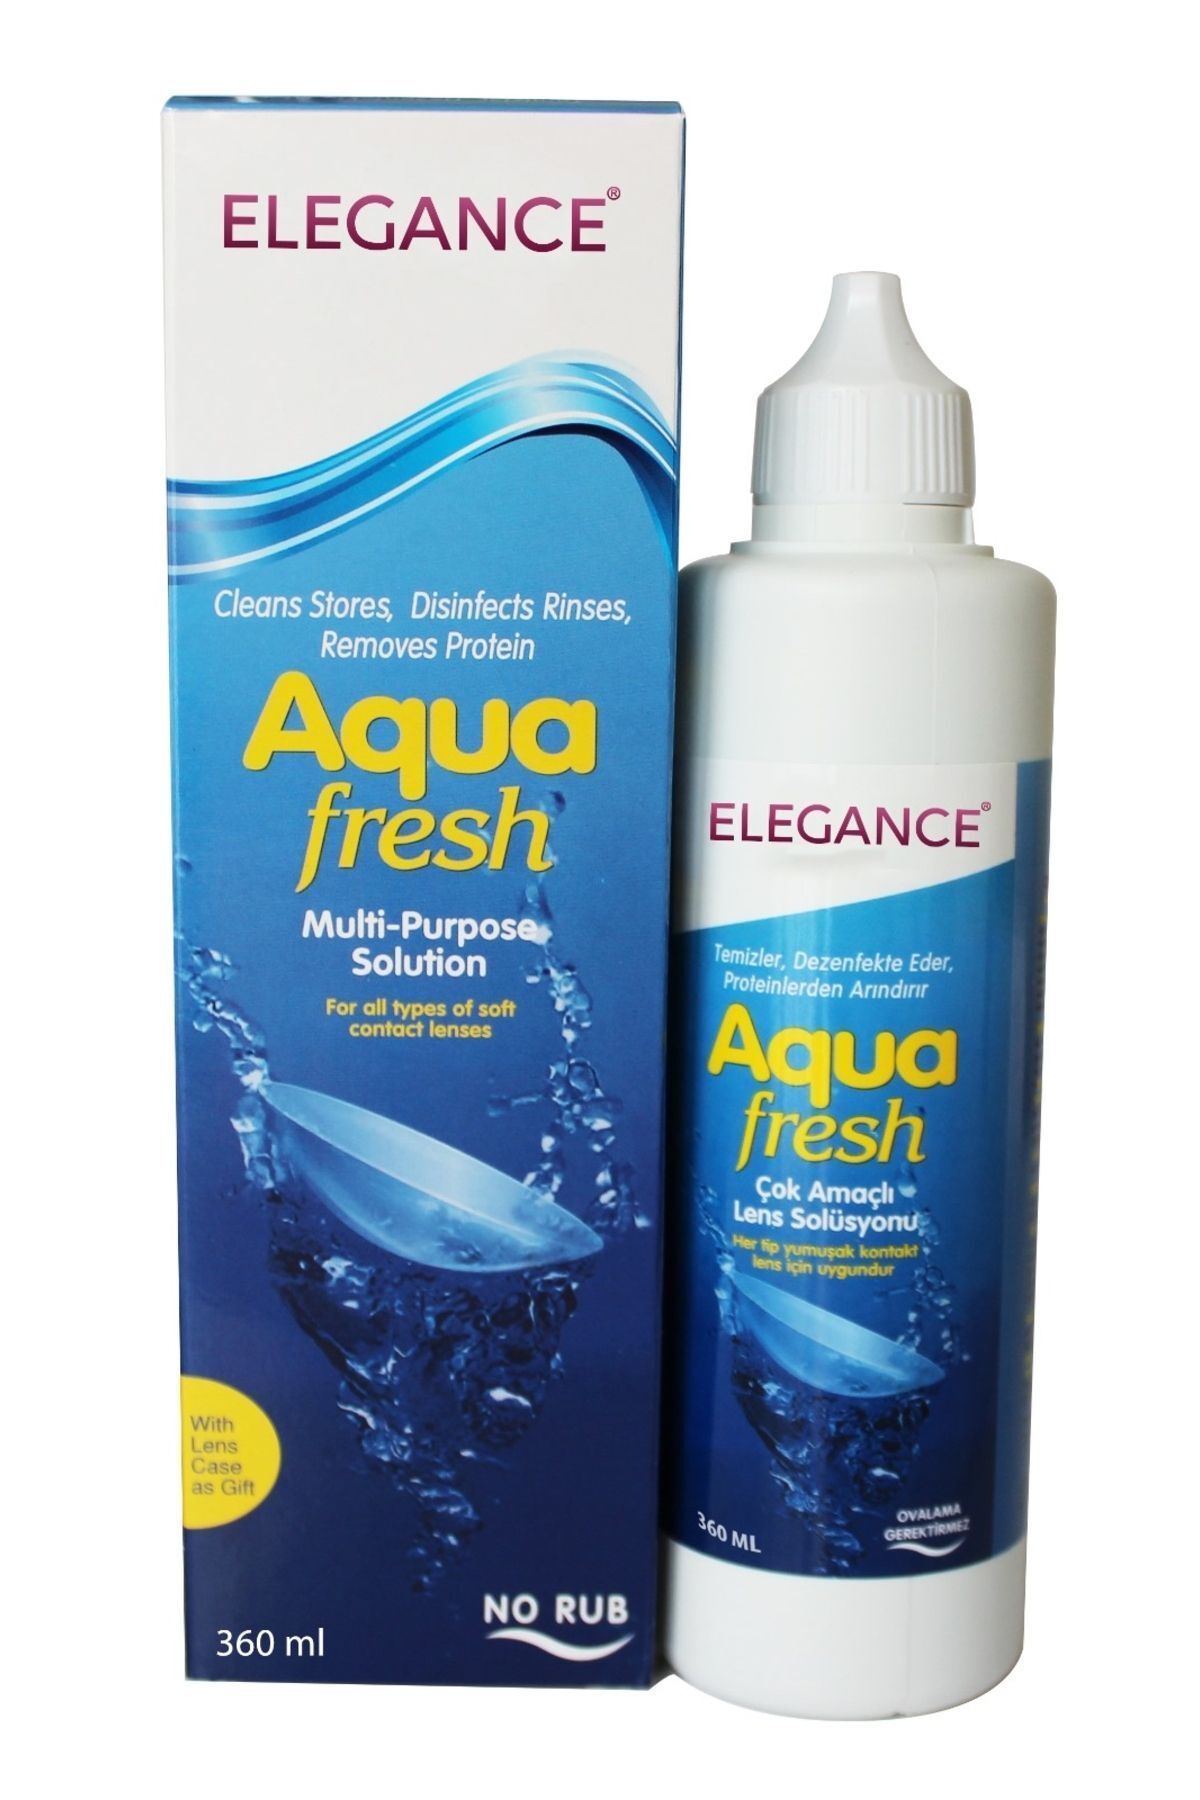 Aquafresh ELEGANCE AQUA FRESH 360 ML LENS SOLÜSYONU